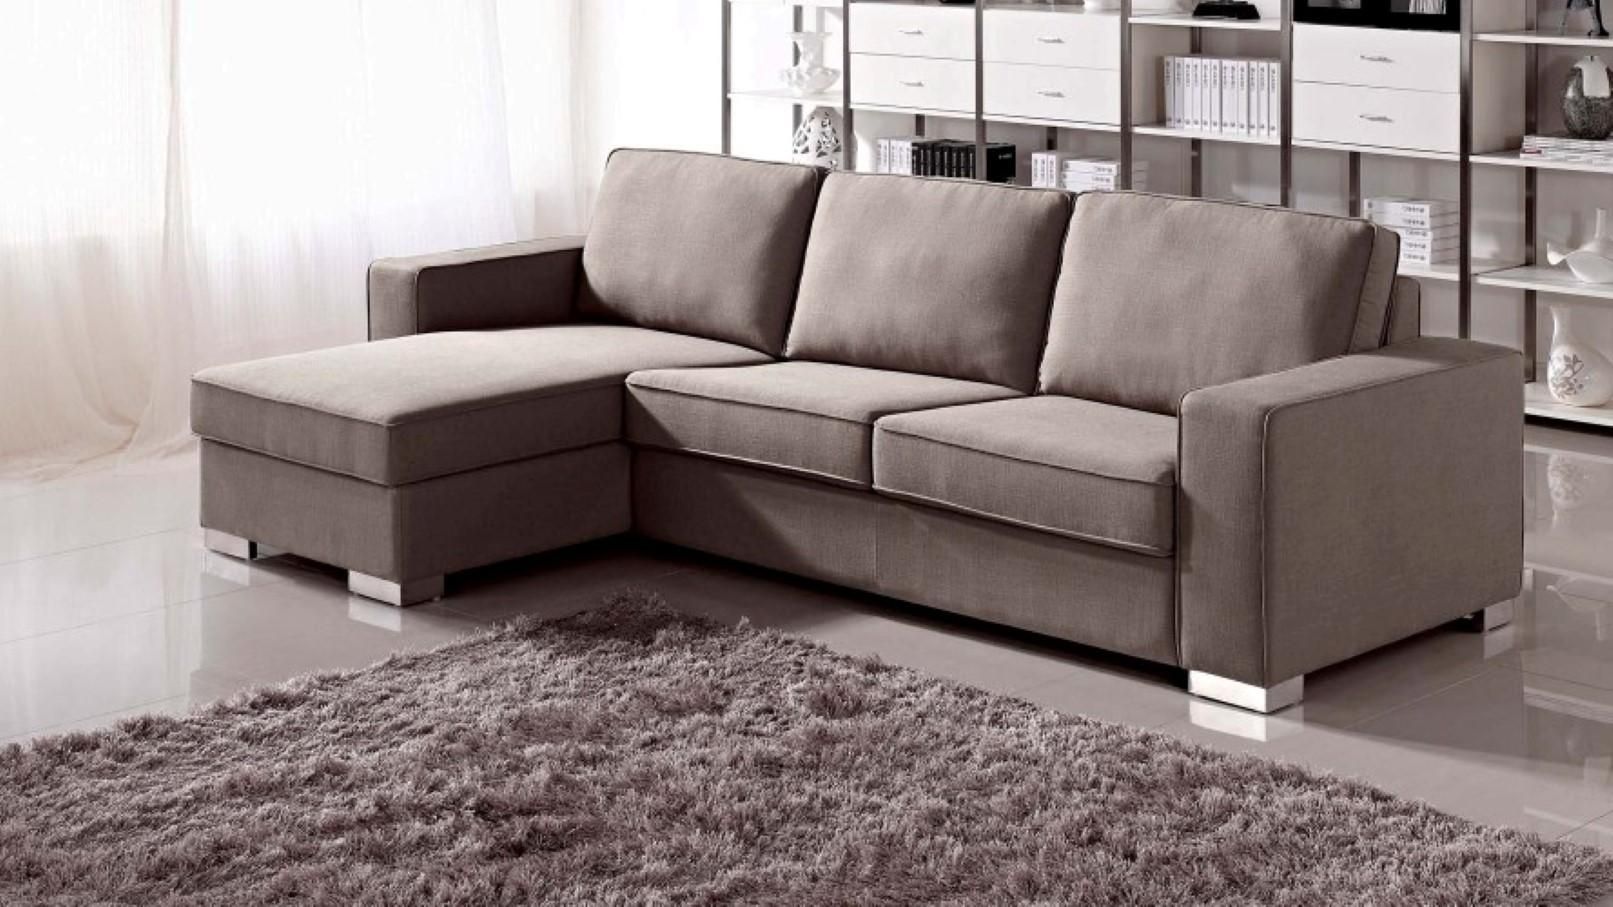 Sears Sleeper Sofa With Inspiration Image 8964 | Kengire Regarding Sears Sleeper Sofas (View 8 of 20)